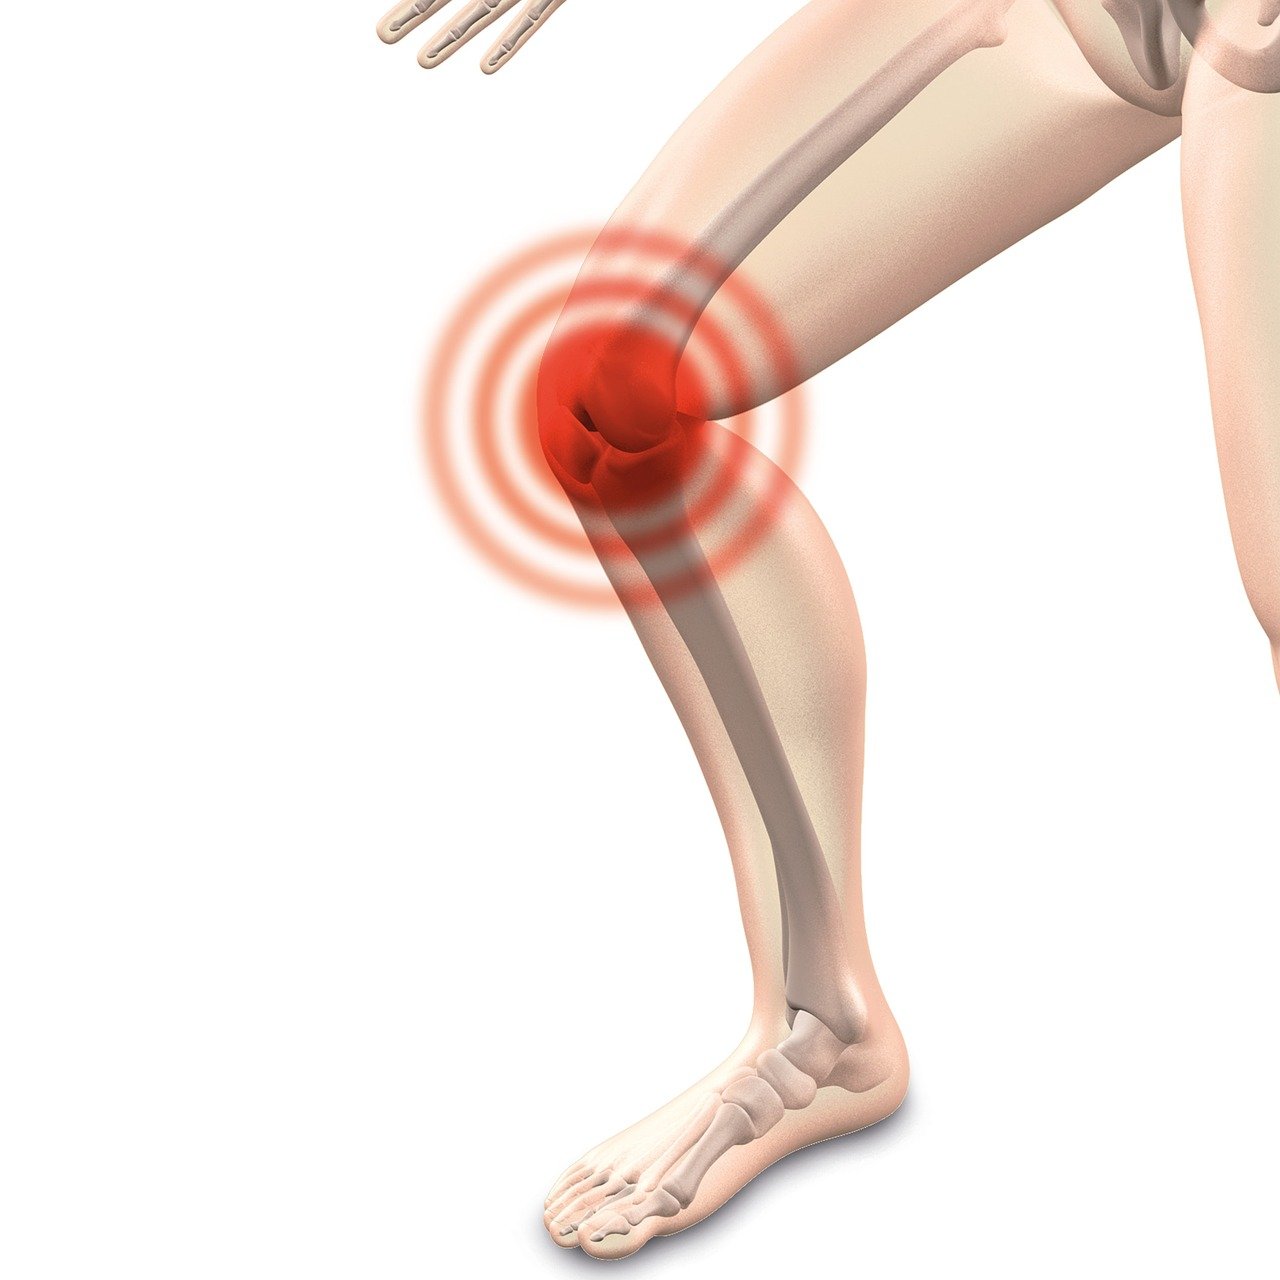 Tarif jeg lytter til musik Observation Knee Instability: Symptoms, Causes, and Treatment - Heiden Orthopedics